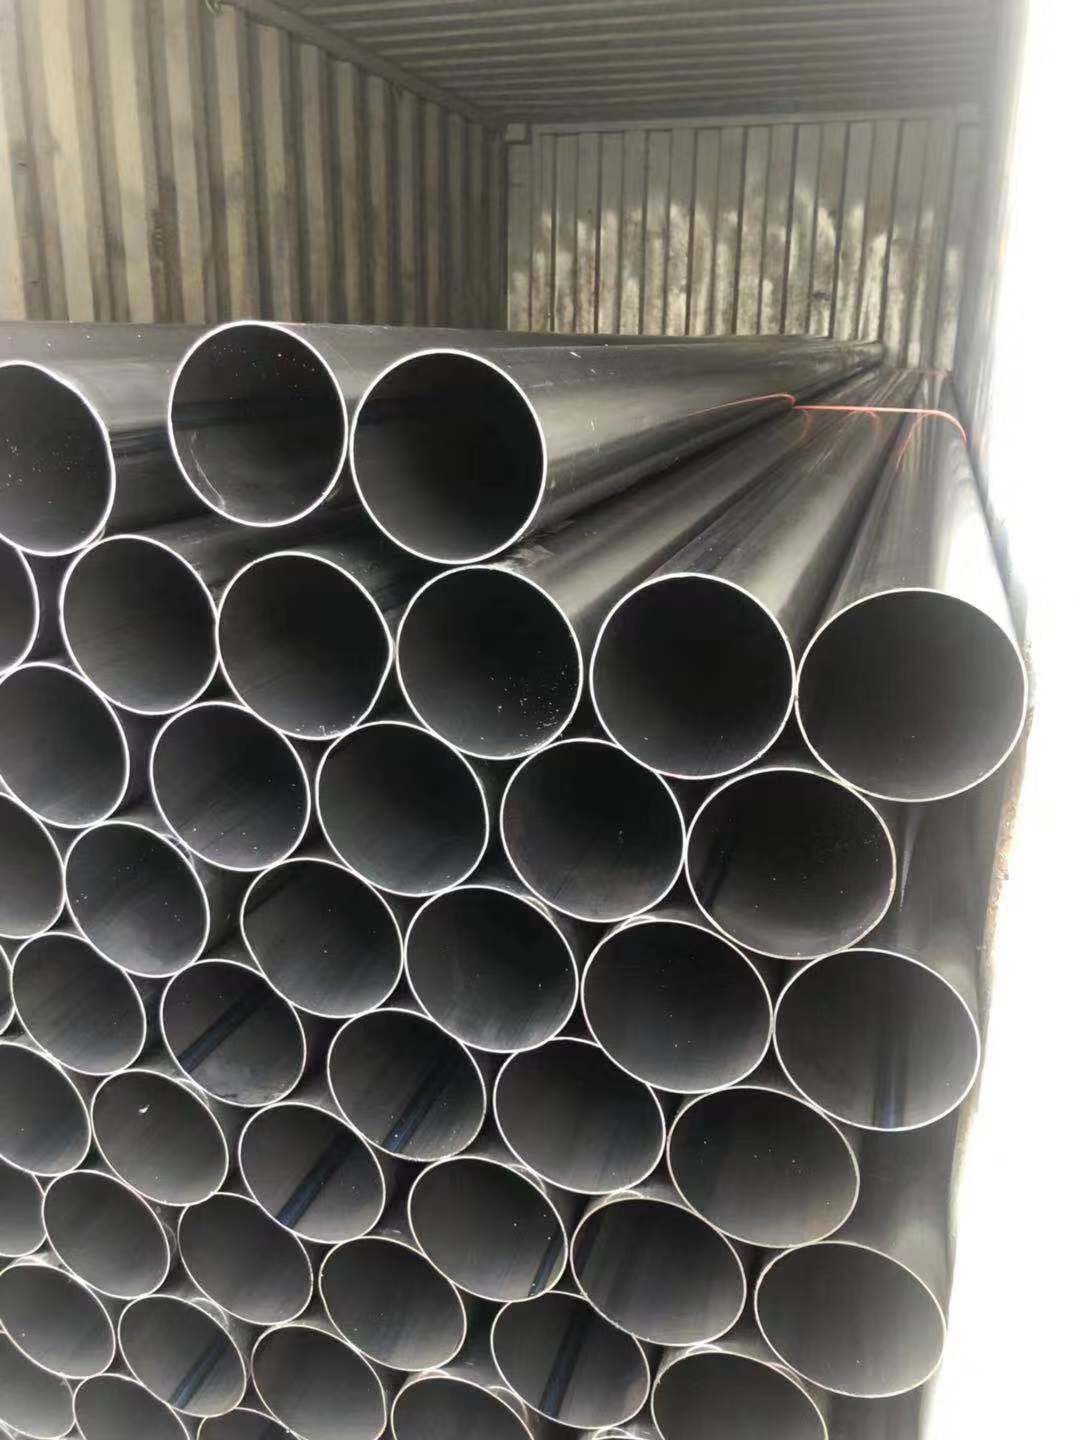 Aluminized steel pipes